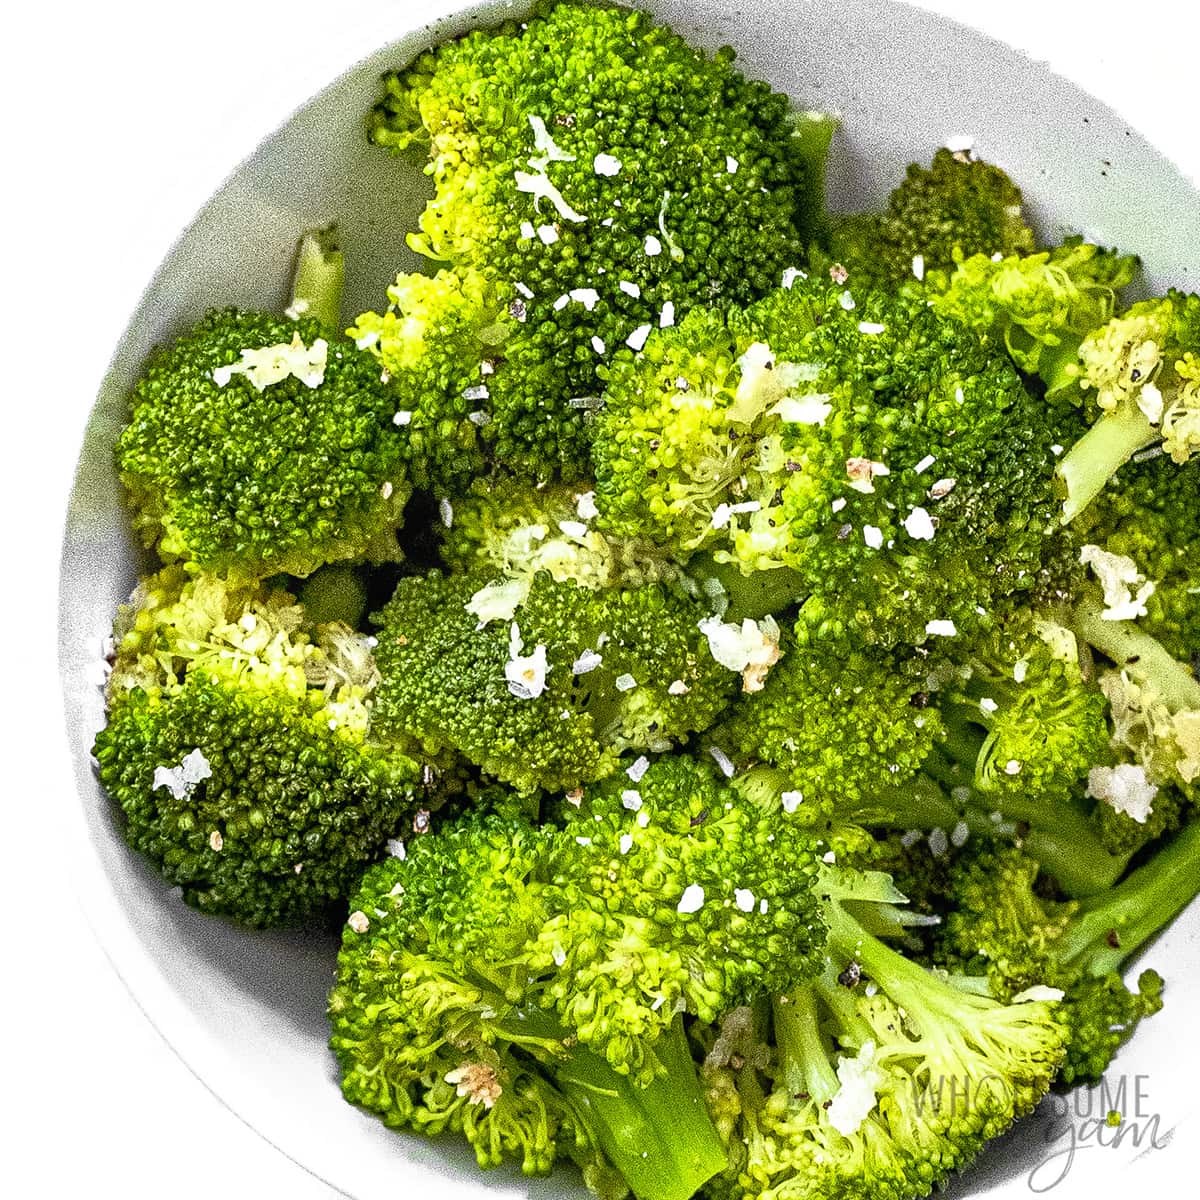 Instant Pot broccoli in a bowl.